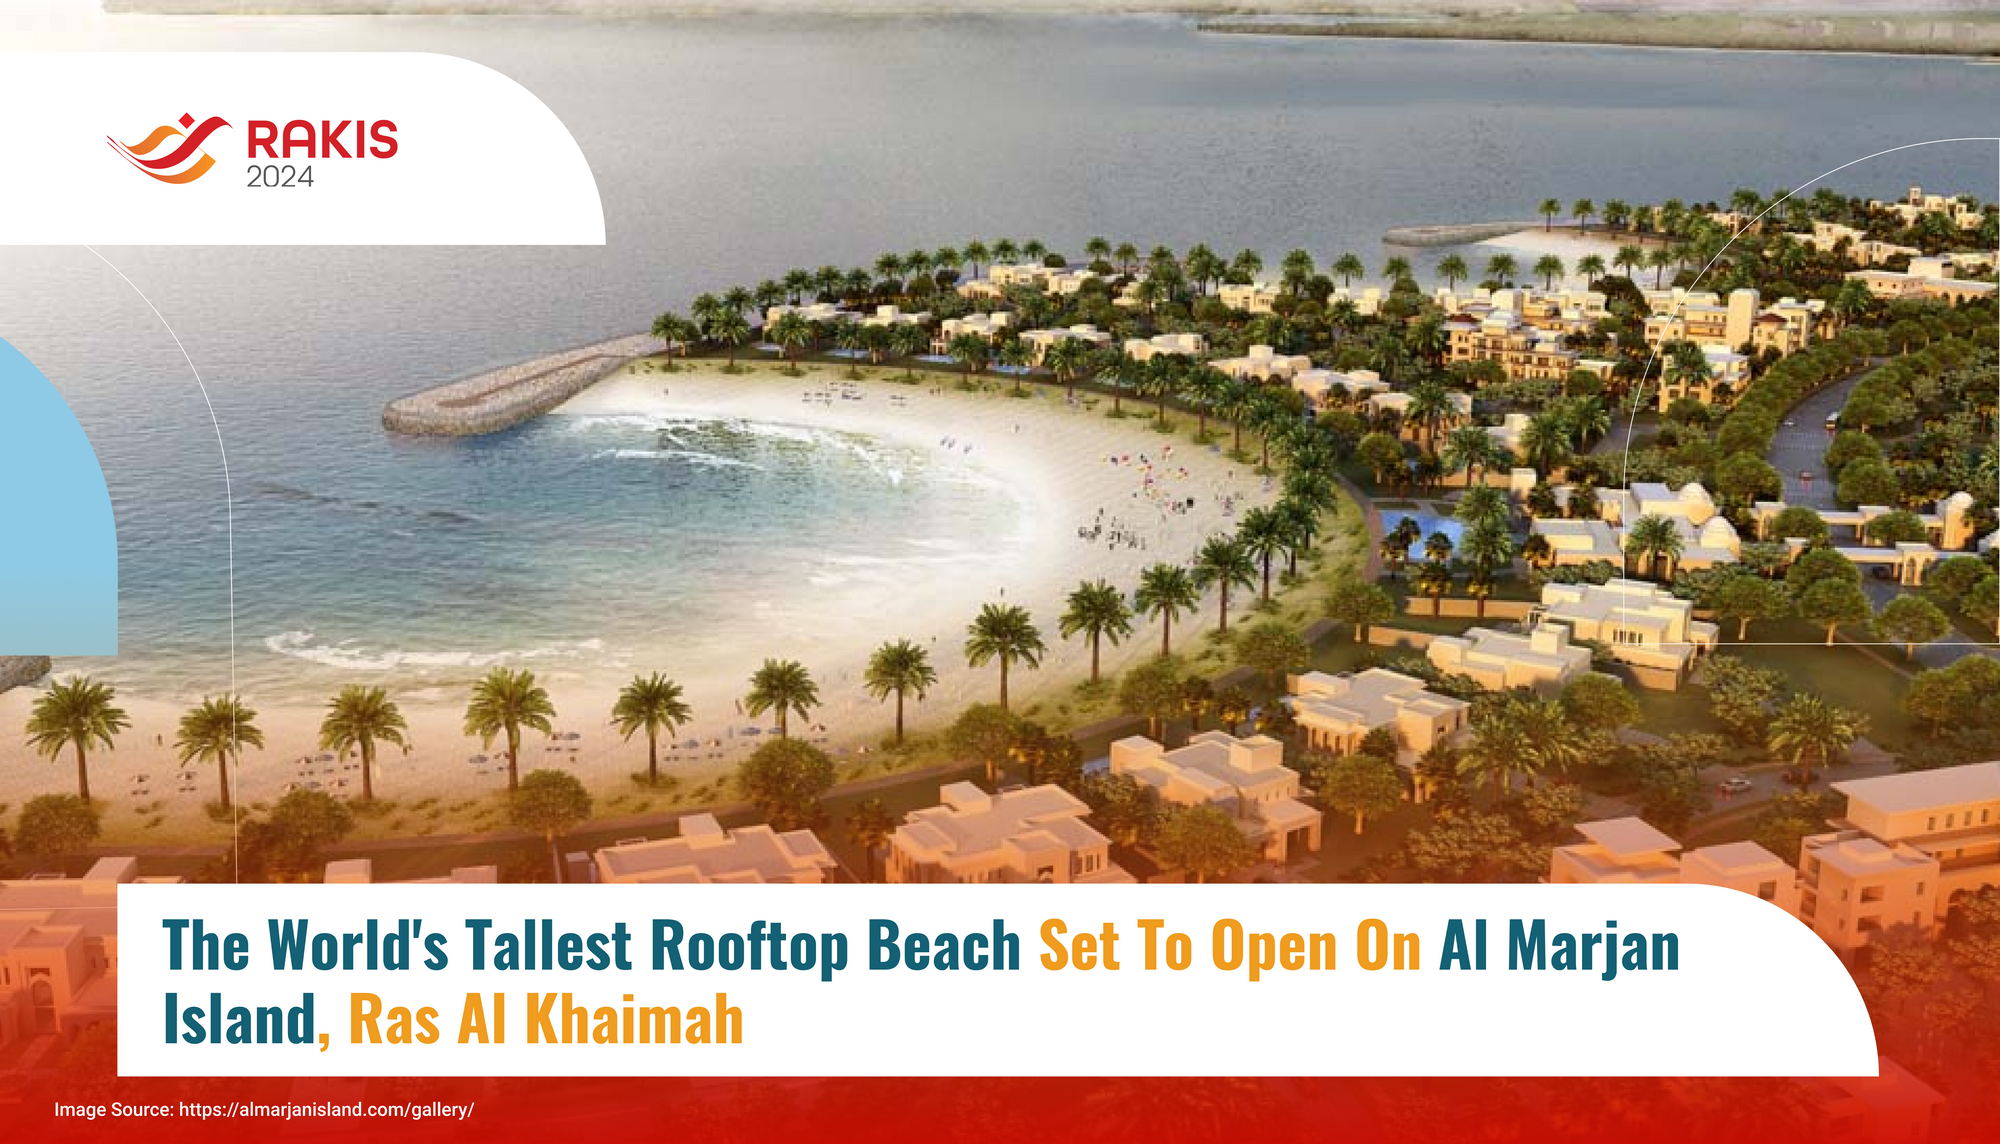 The World's Tallest Rooftop Beach Set to Open on Al Marjan Island, Ras Al Khaimah